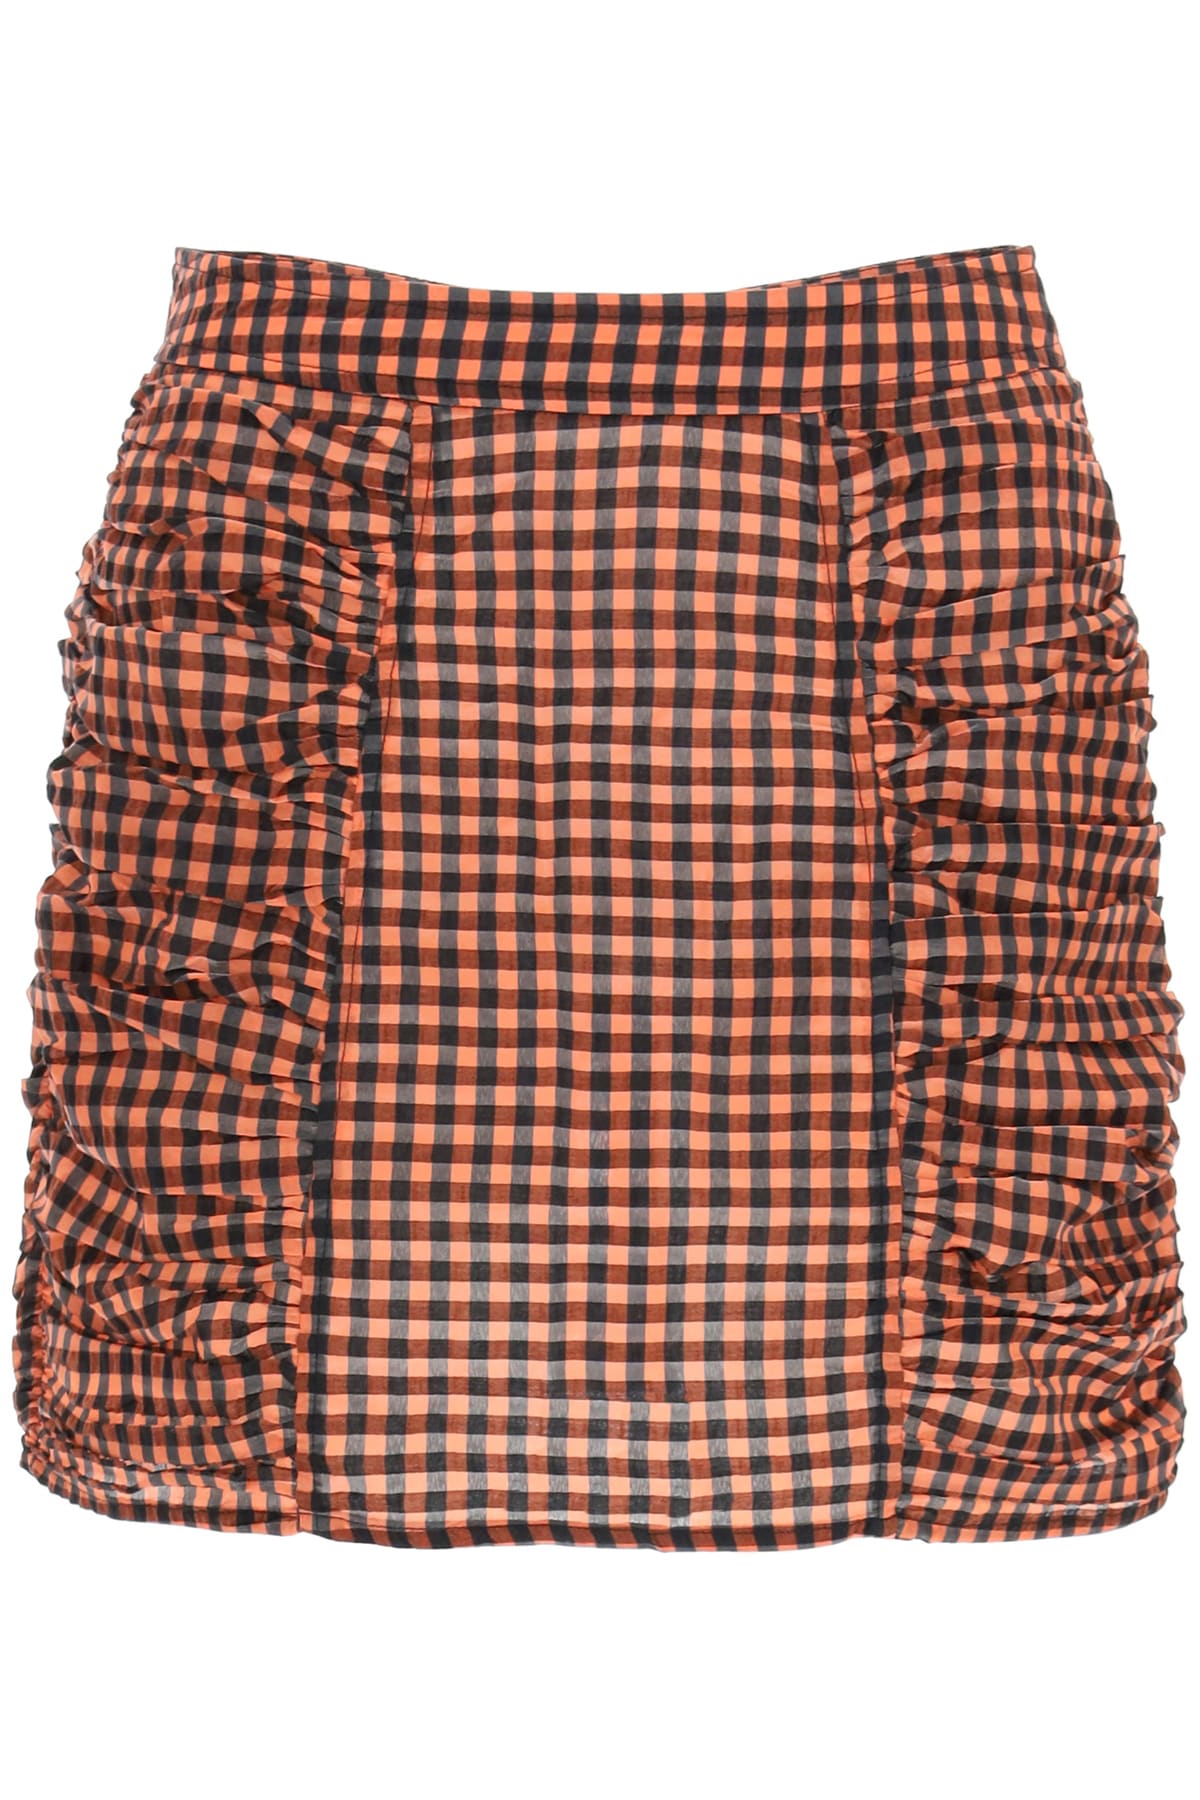 Ganni Seersucker Check Mini Skirt